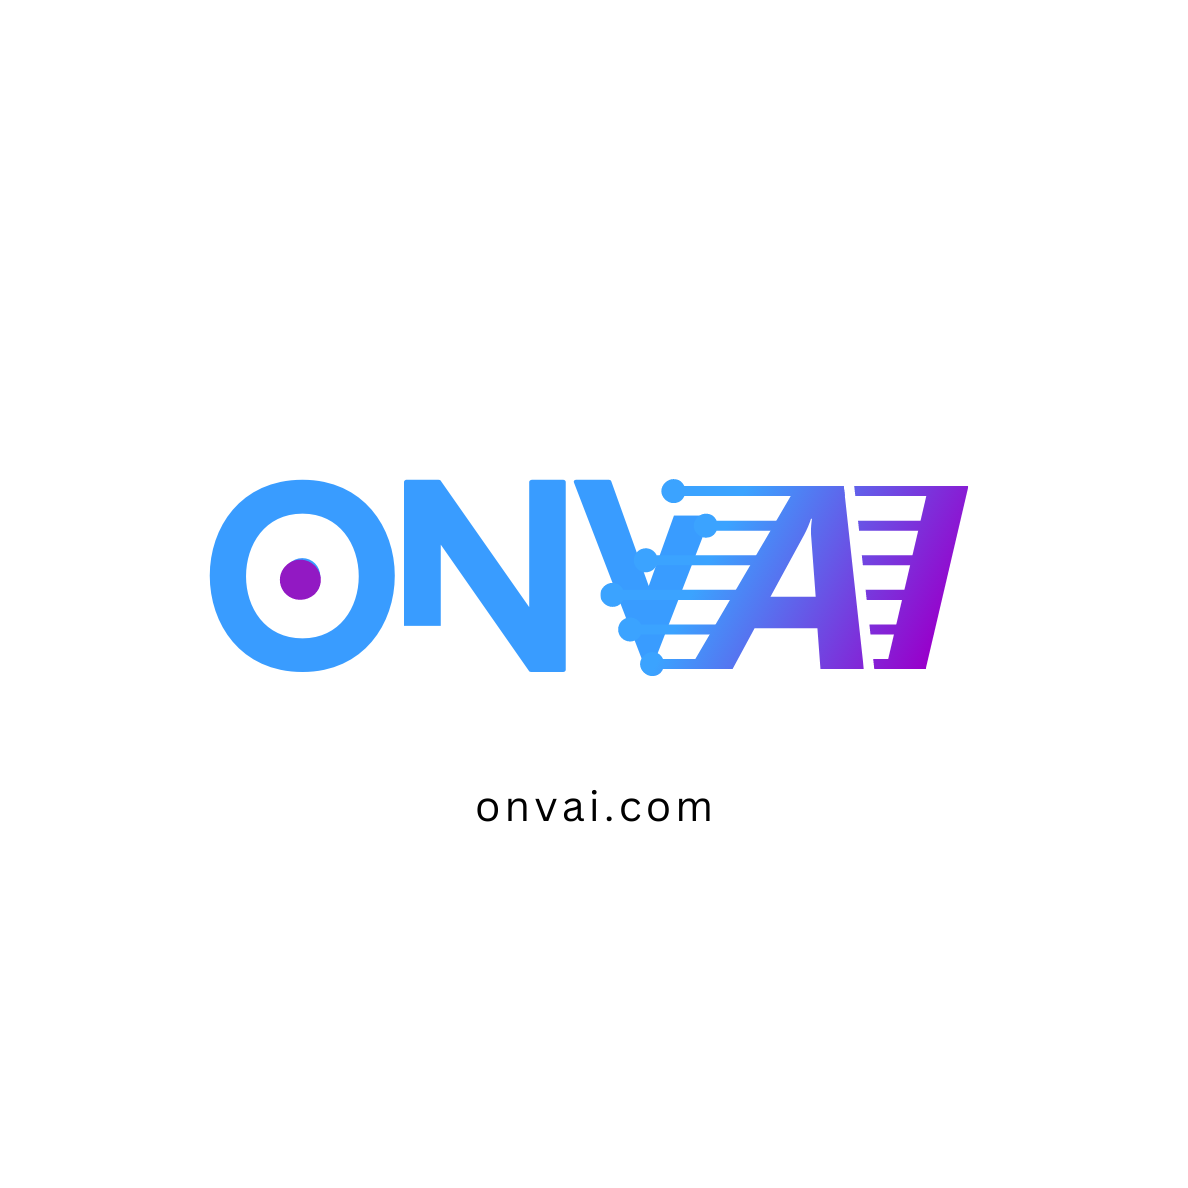 onvai.com - domain for sale